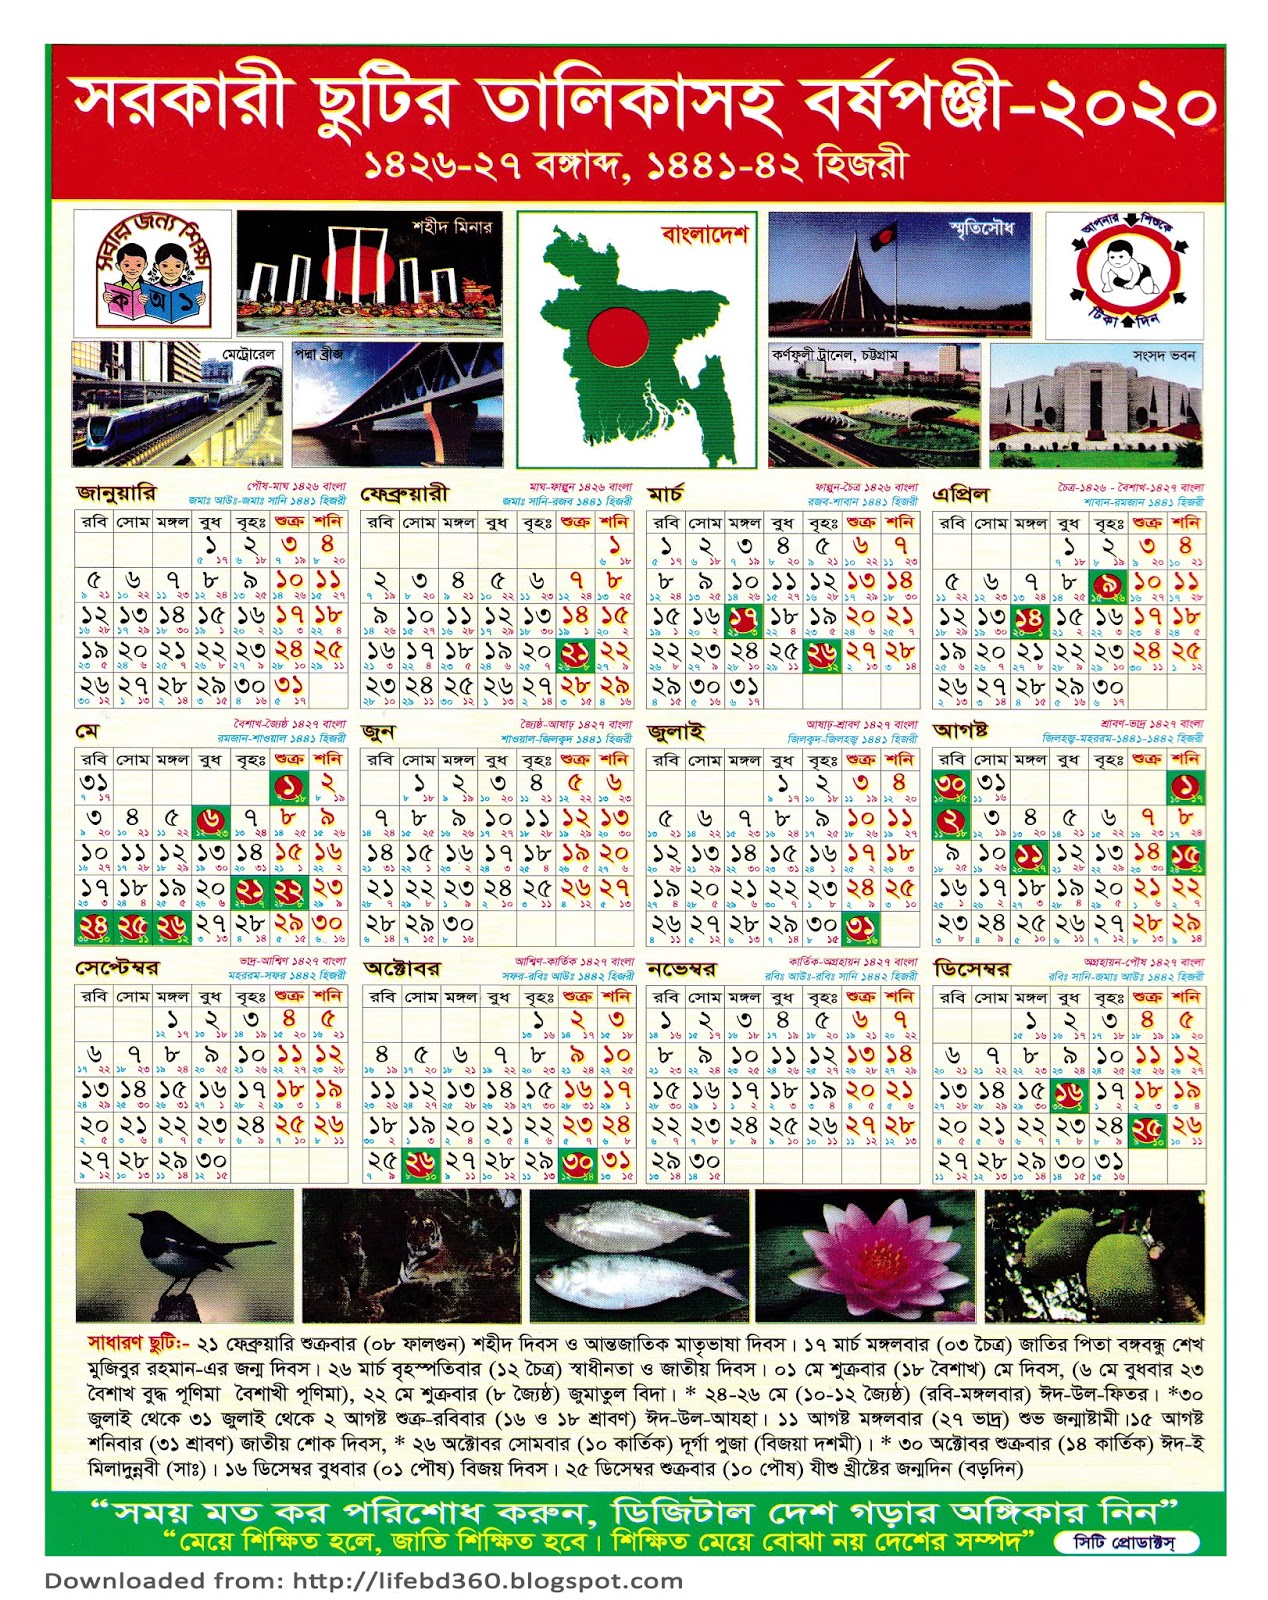 bangladesh-government-holiday-calendar-2020-life-in-bangladesh